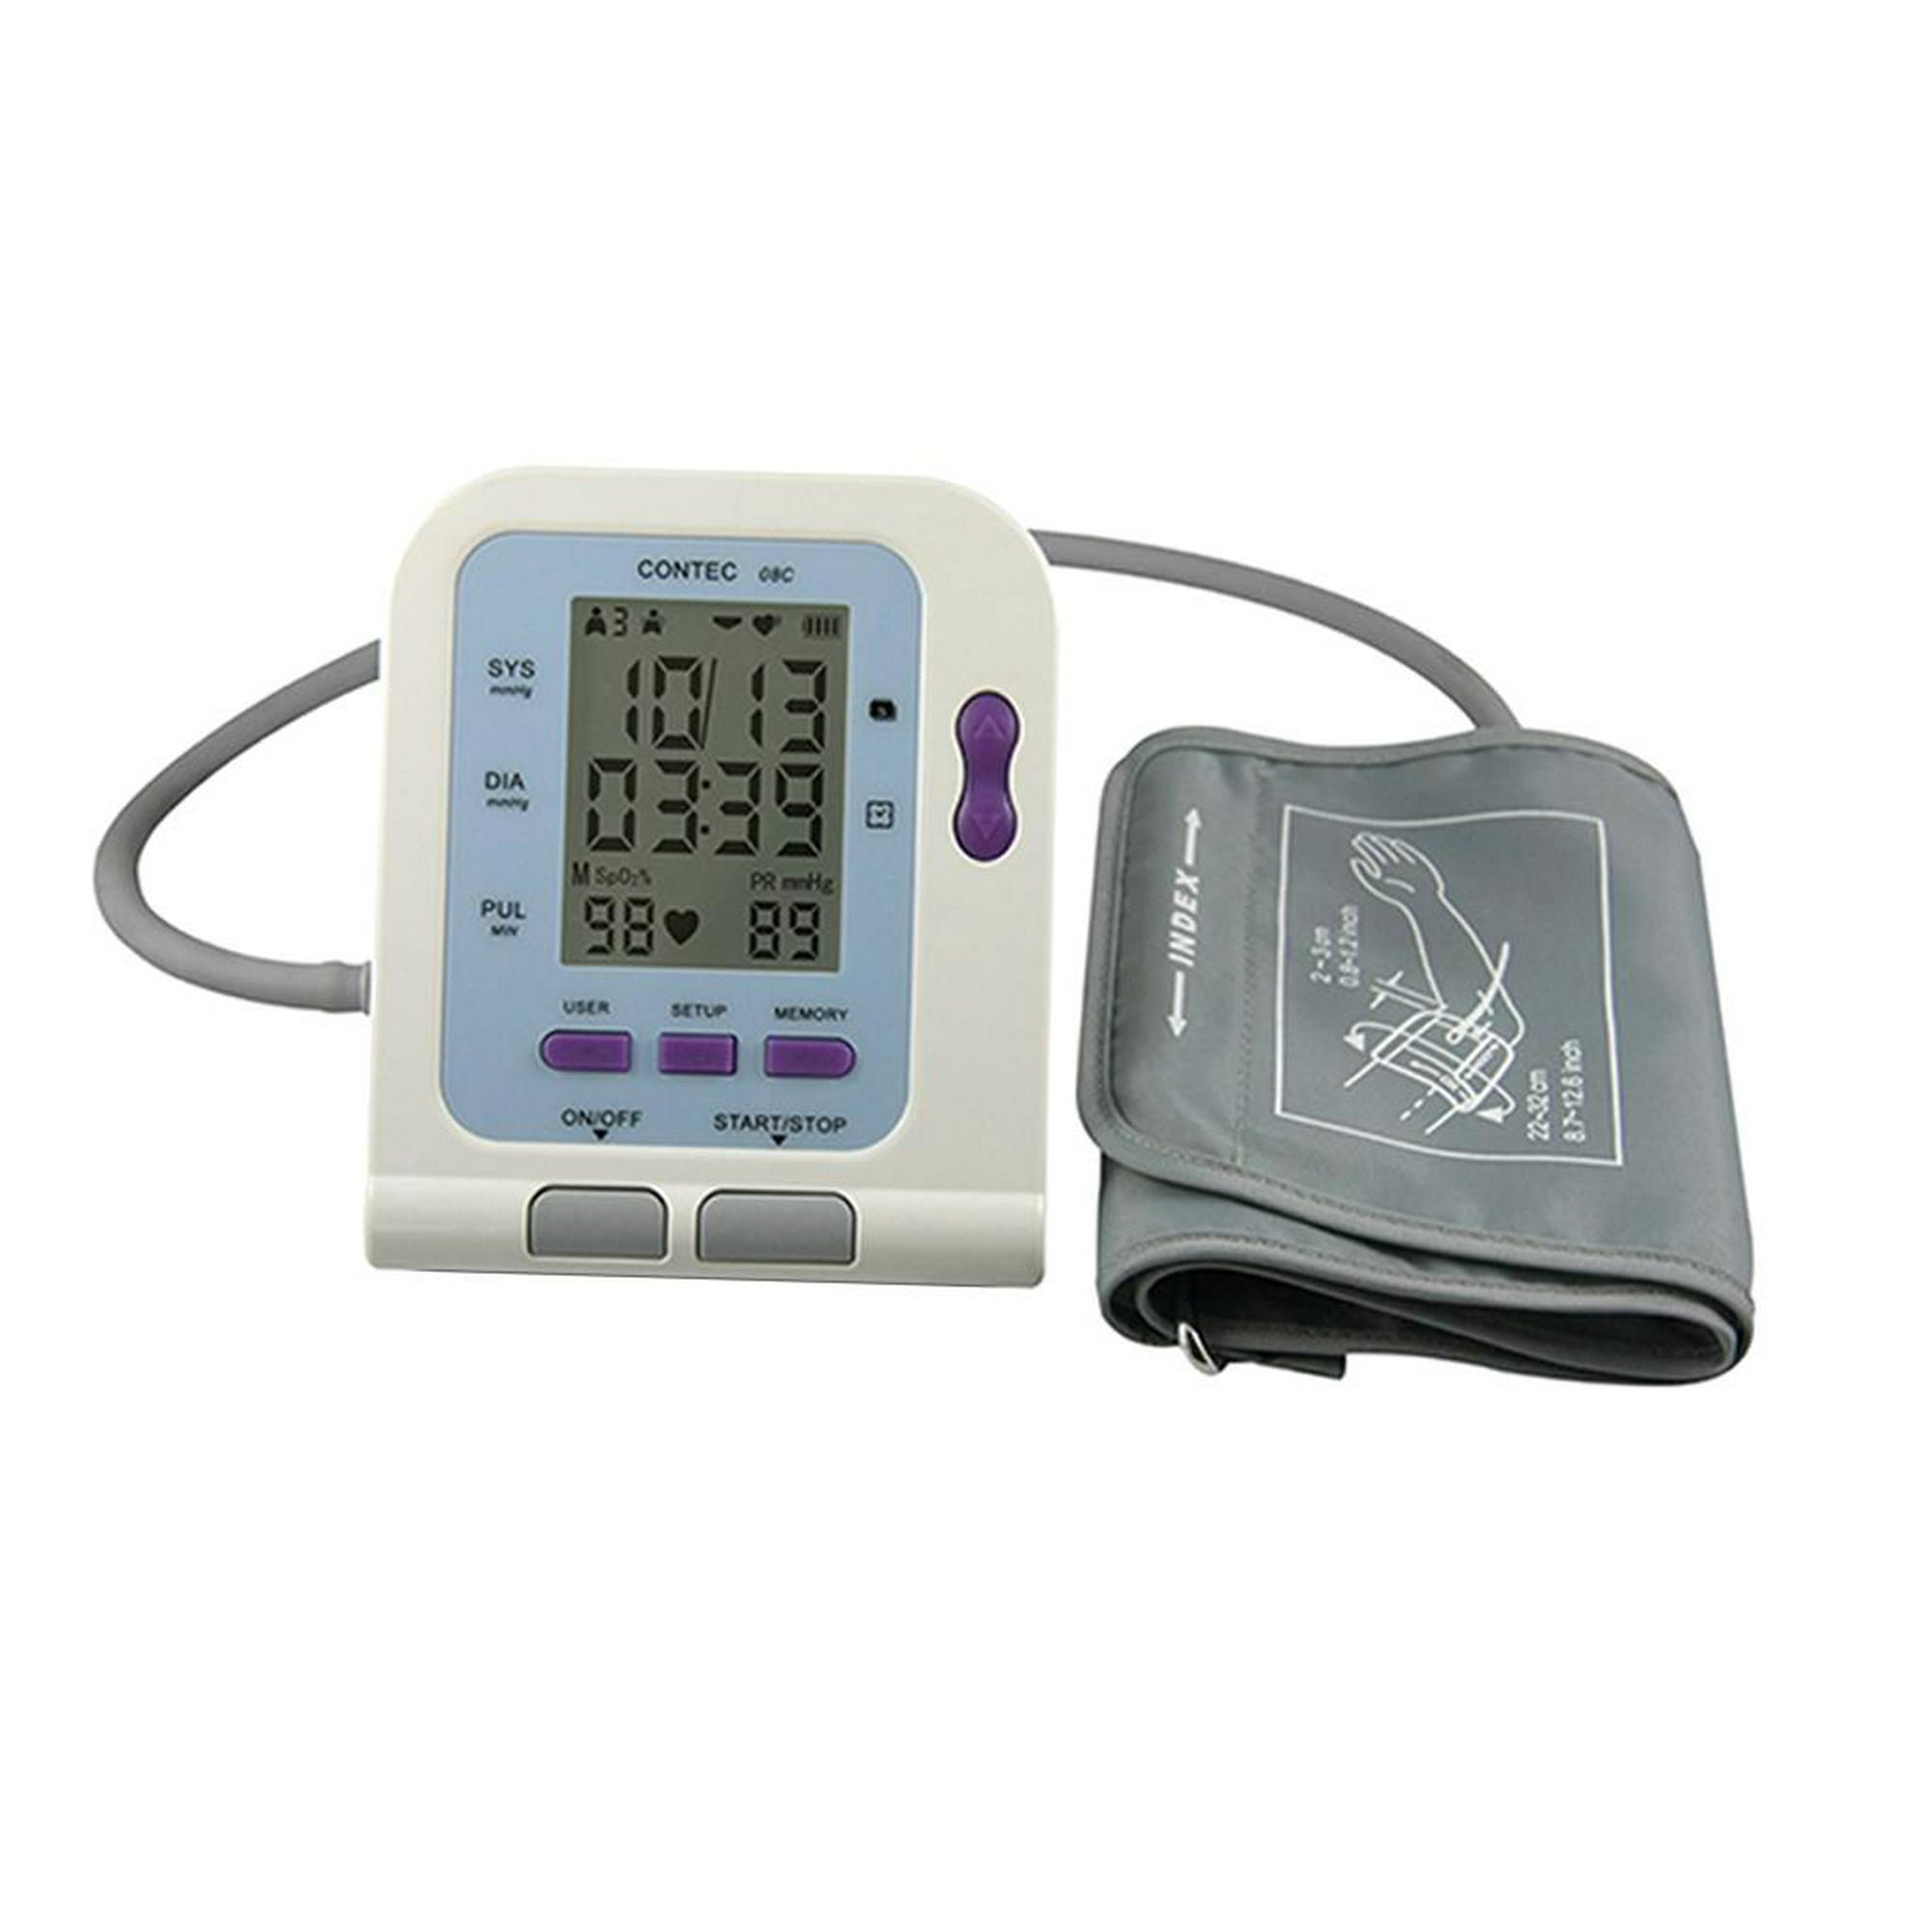 Monitor de presión arterial del brazo superior, recargable por USB, máquina  digital BP con cable de alimentación, pantalla LCD grande, transmisión de